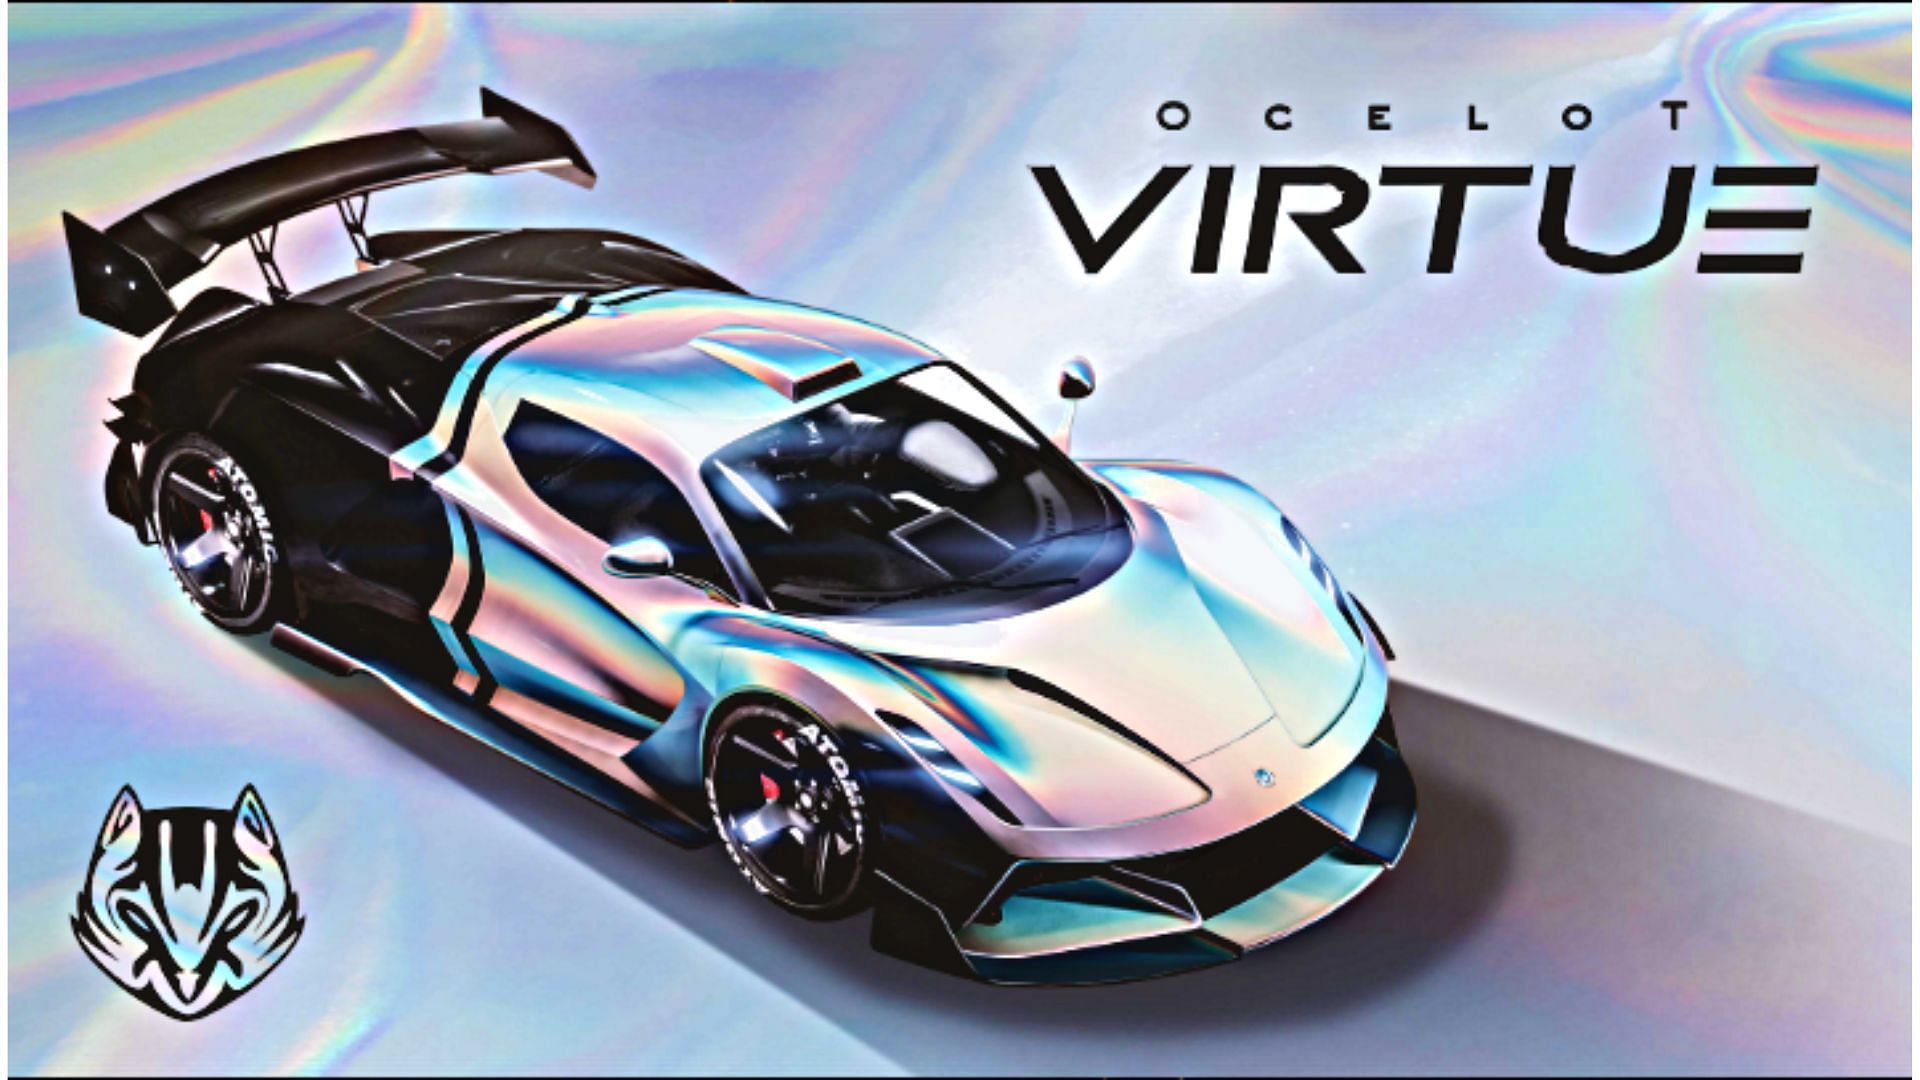 The new Ocelot Virtue (Image via Rockstar Games)